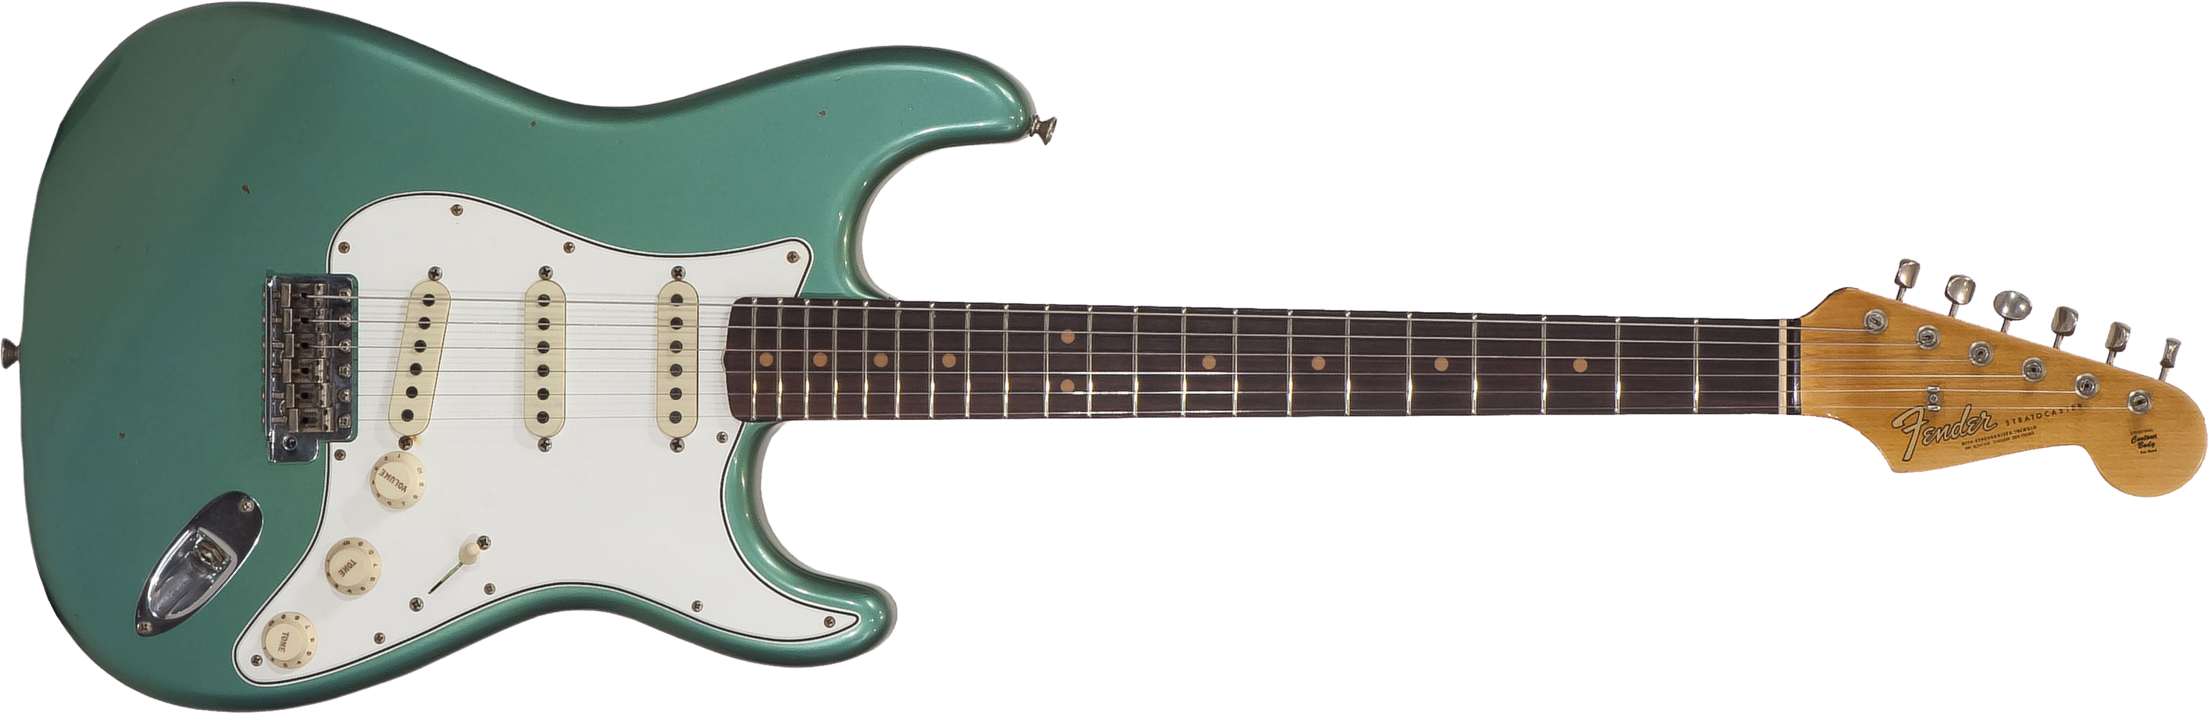 Fender Custom Shop Strat 64 Ltd 2018 Rw - Journeyman Relic Sage Green Metallic - E-Gitarre in Str-Form - Main picture